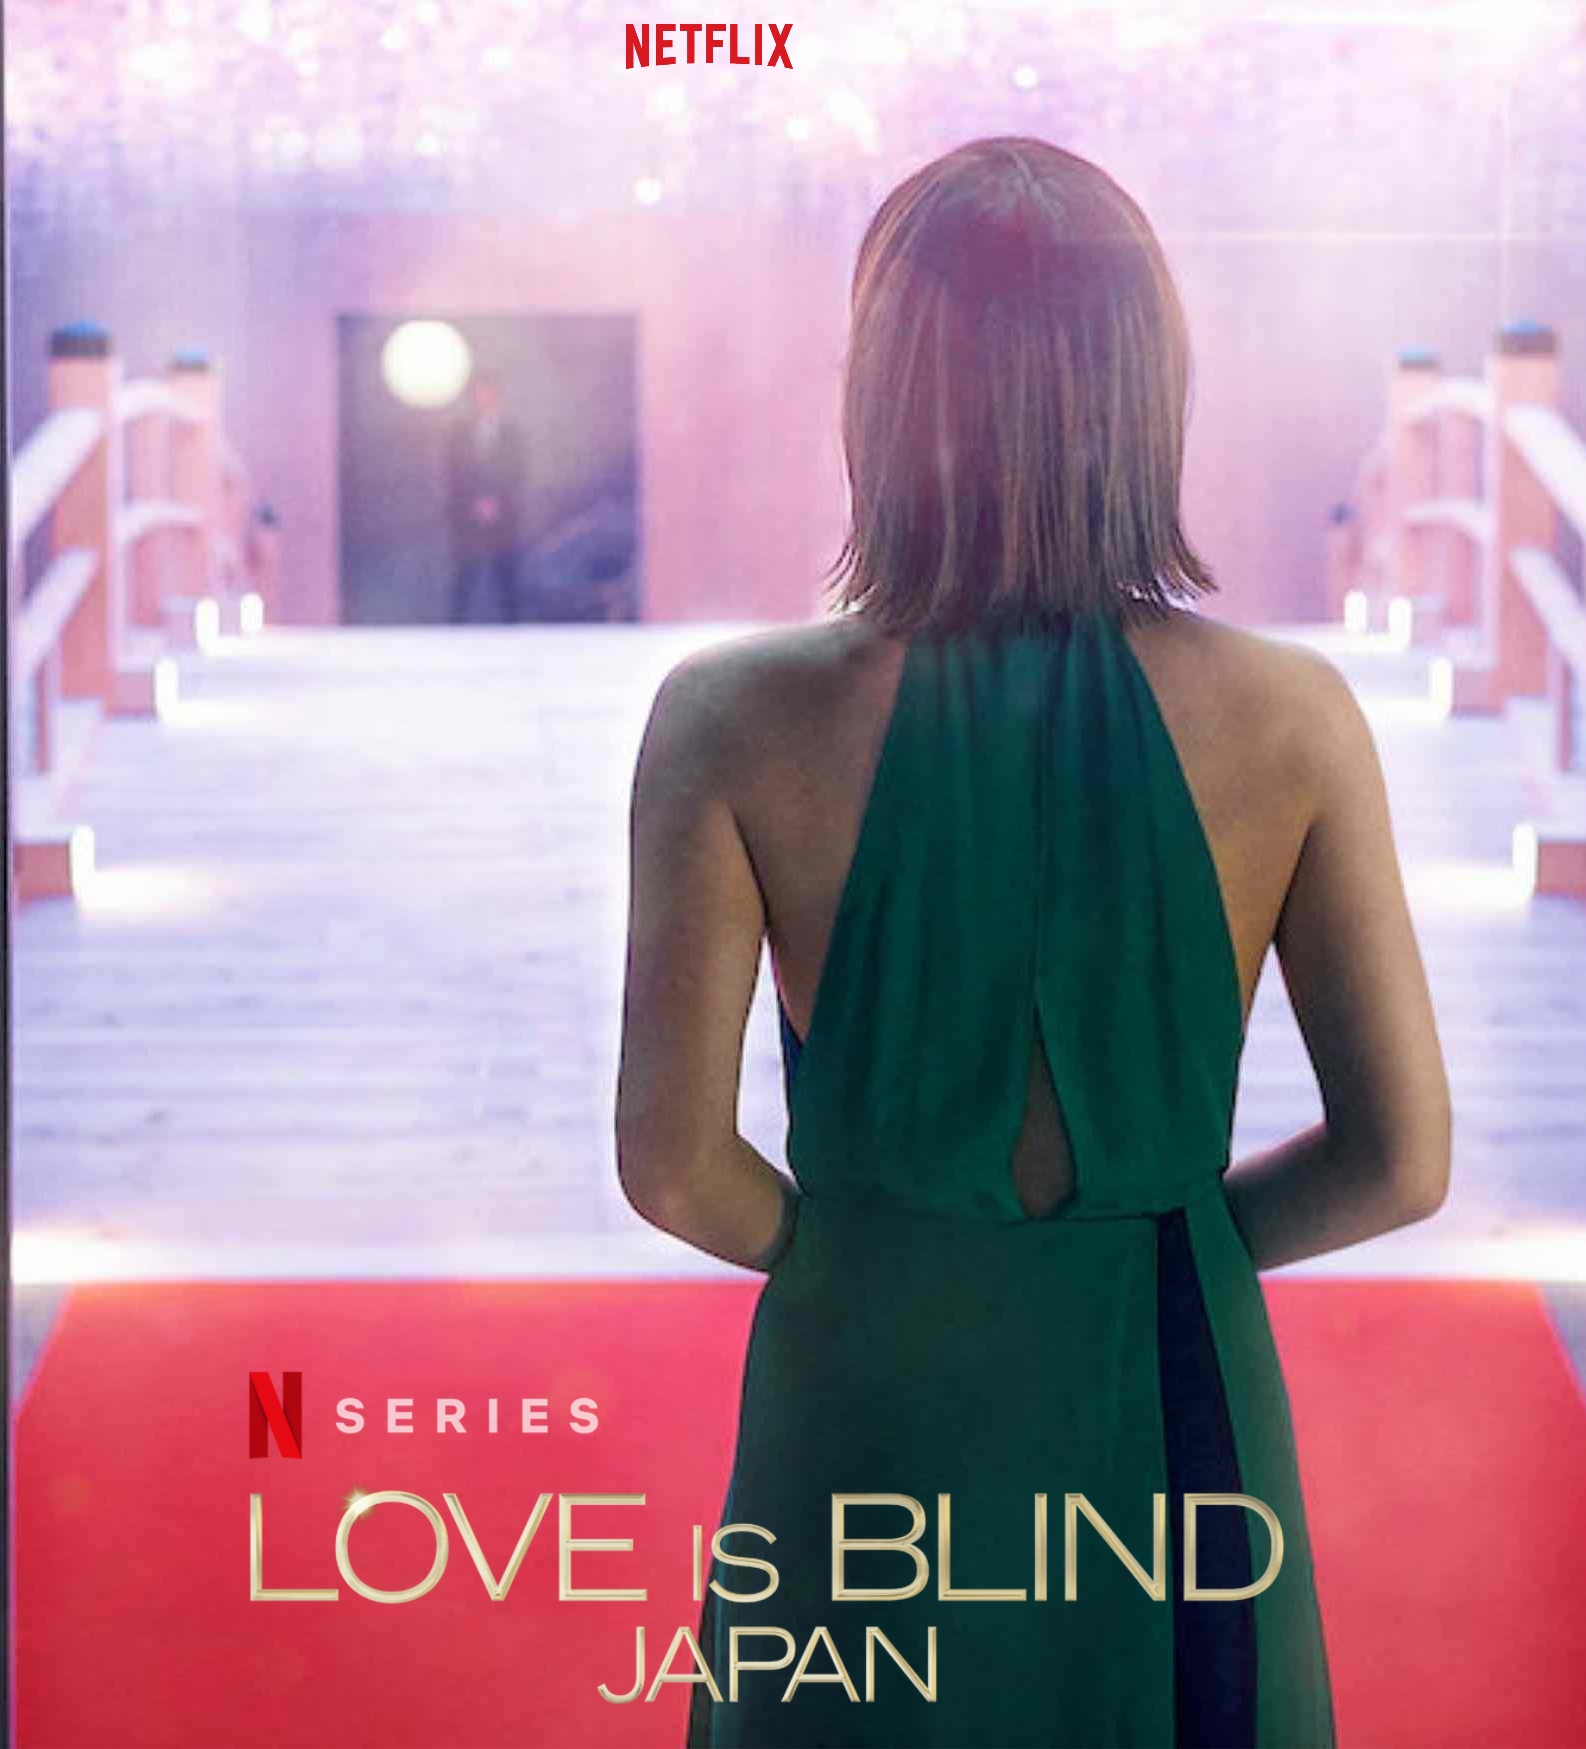 Is “Love is Blind Japan” on Netflix